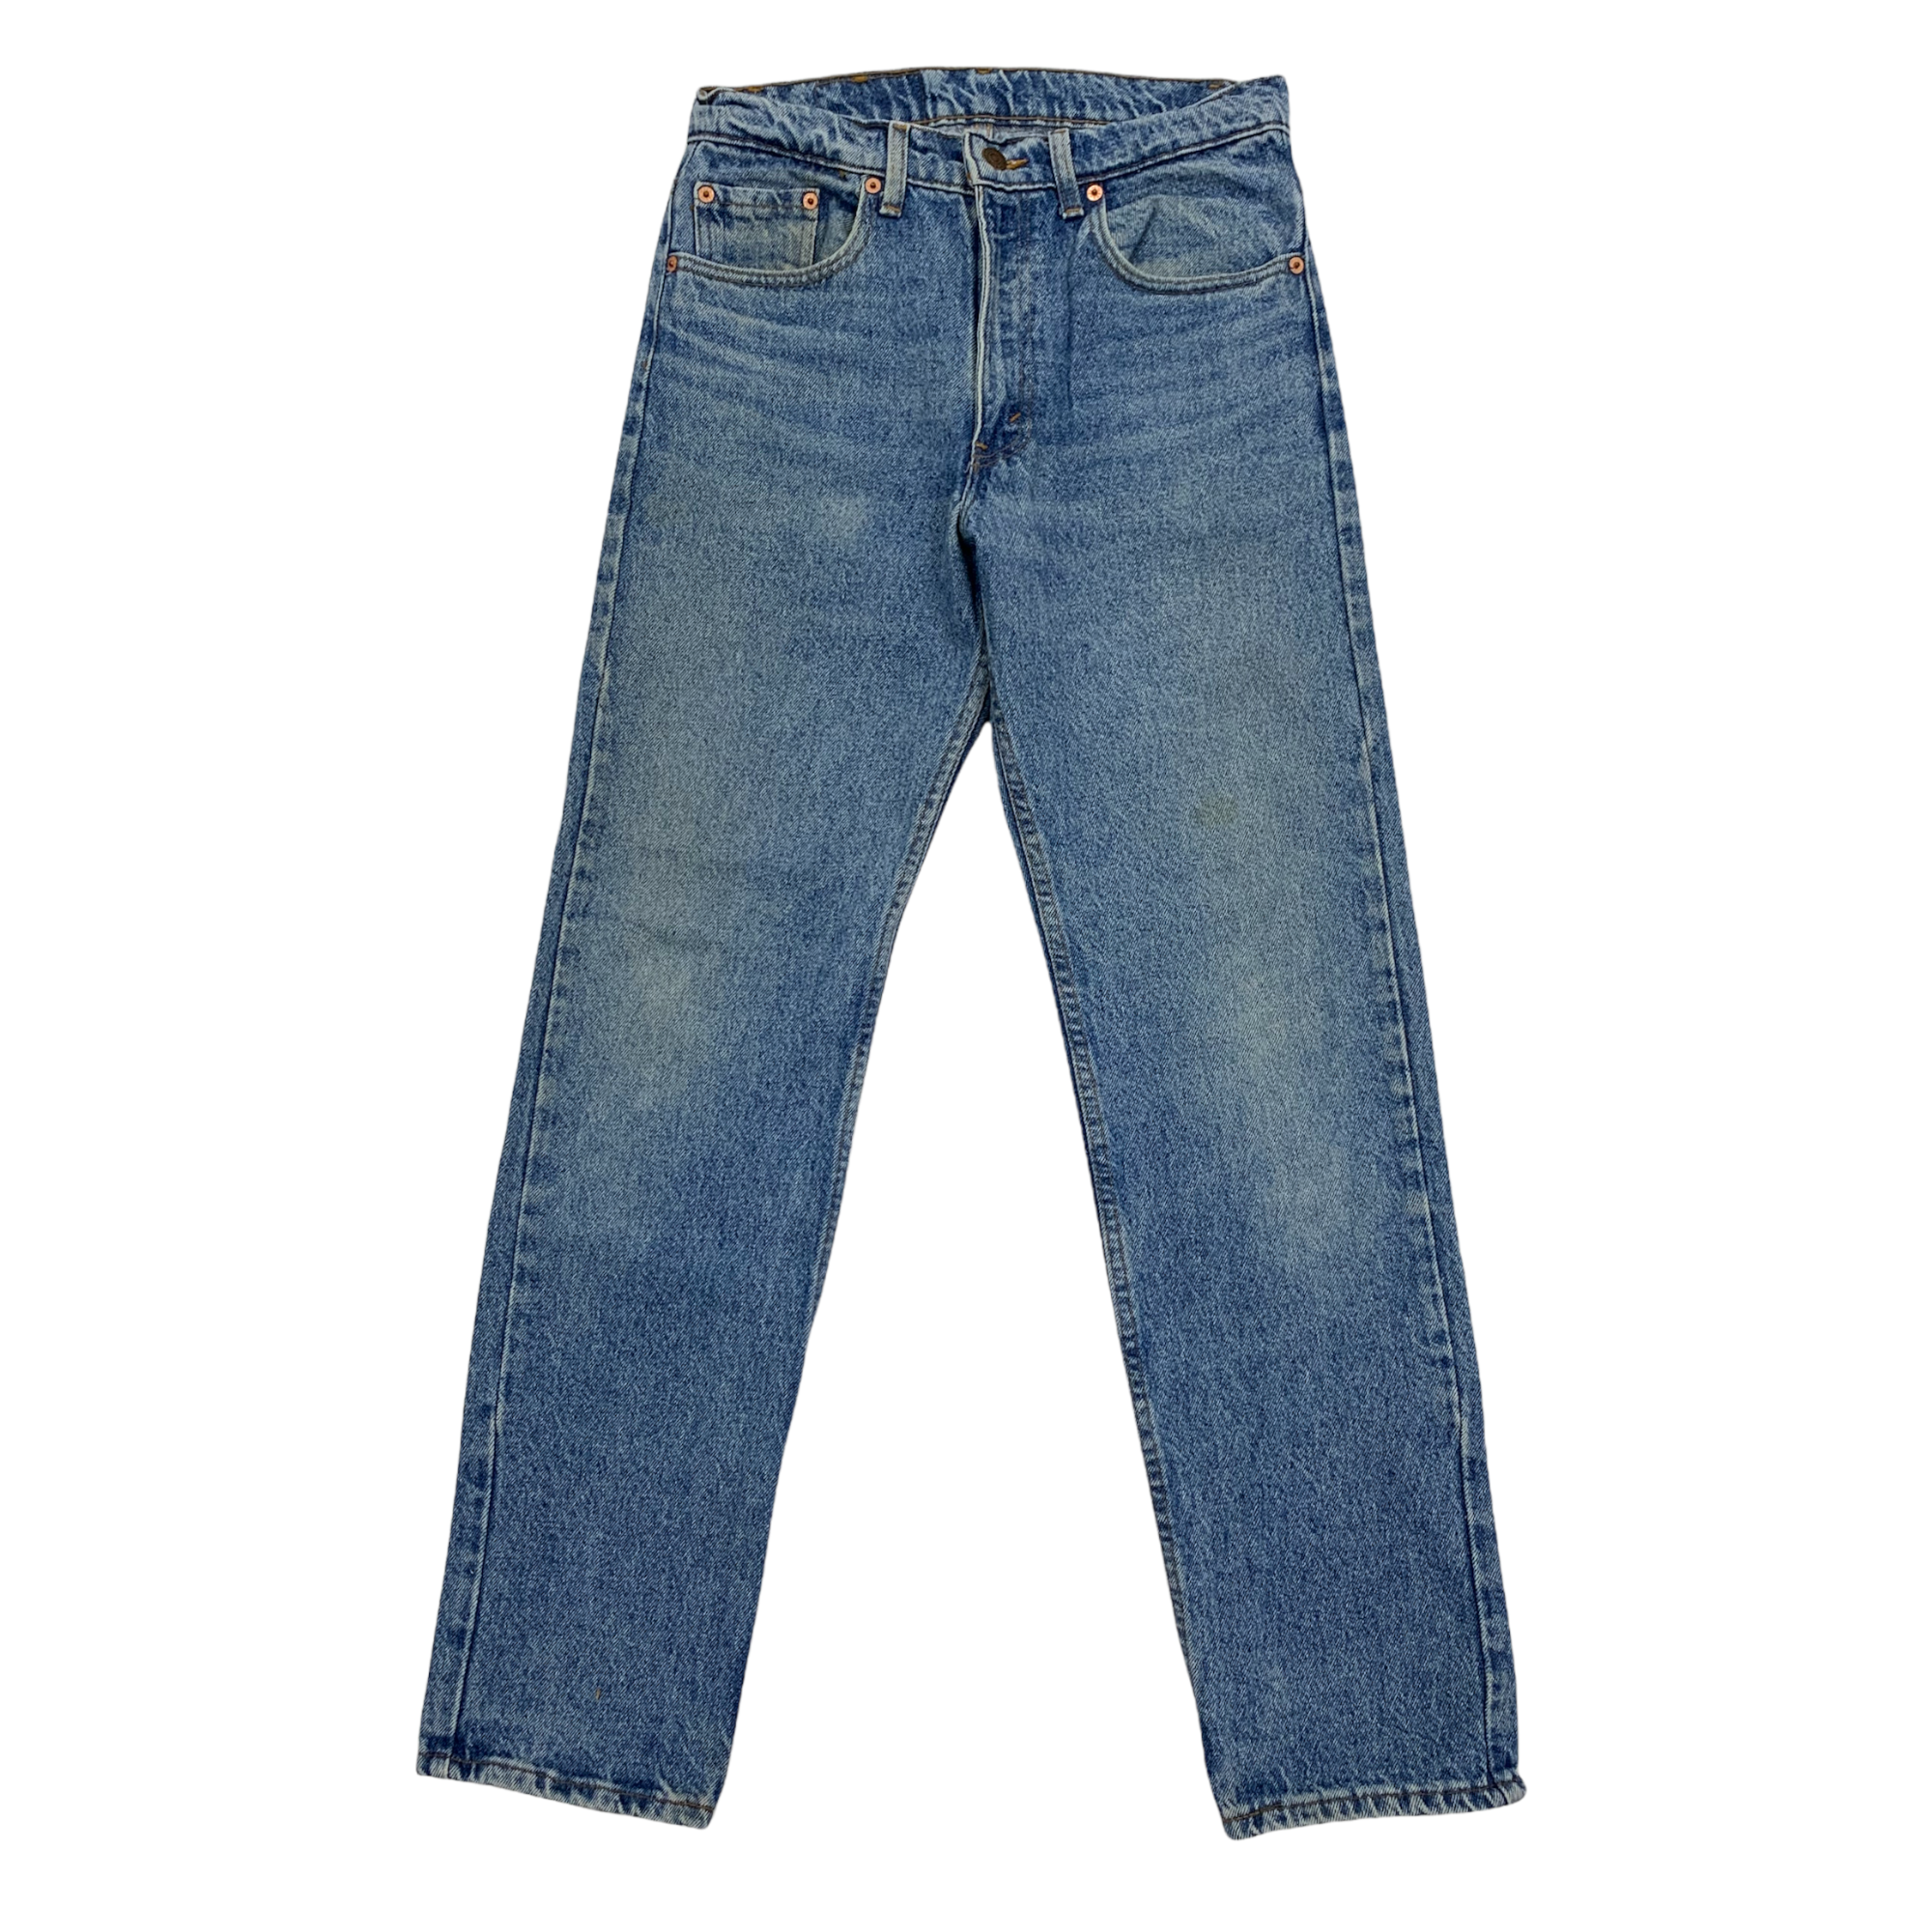 Faded ‘90s Levi’s 505 Denim Jeans - Medium Wash - 29x31